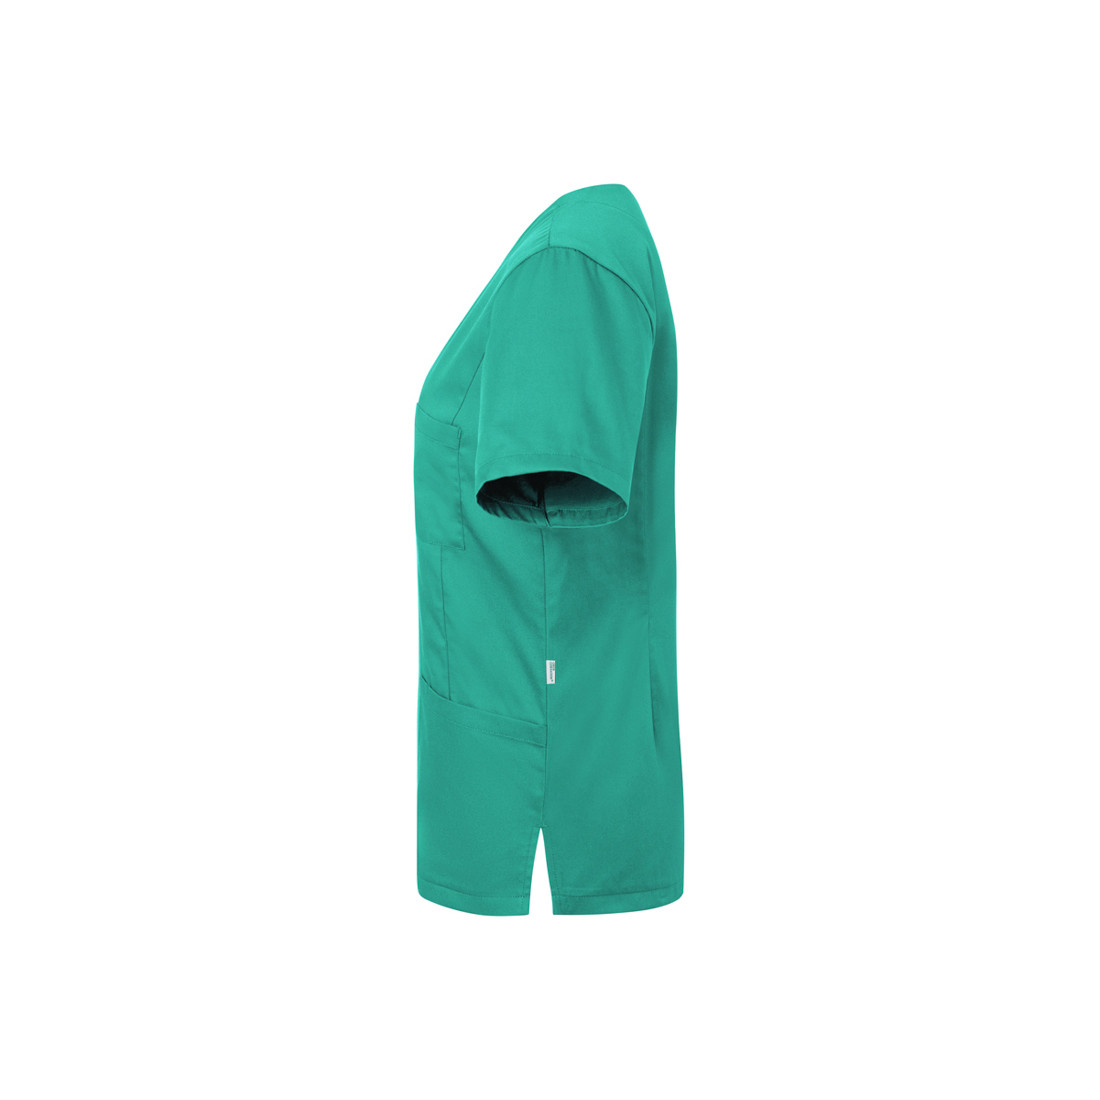 Short-Sleeve Ladies' Slip-on Tunic Essential - Safetywear